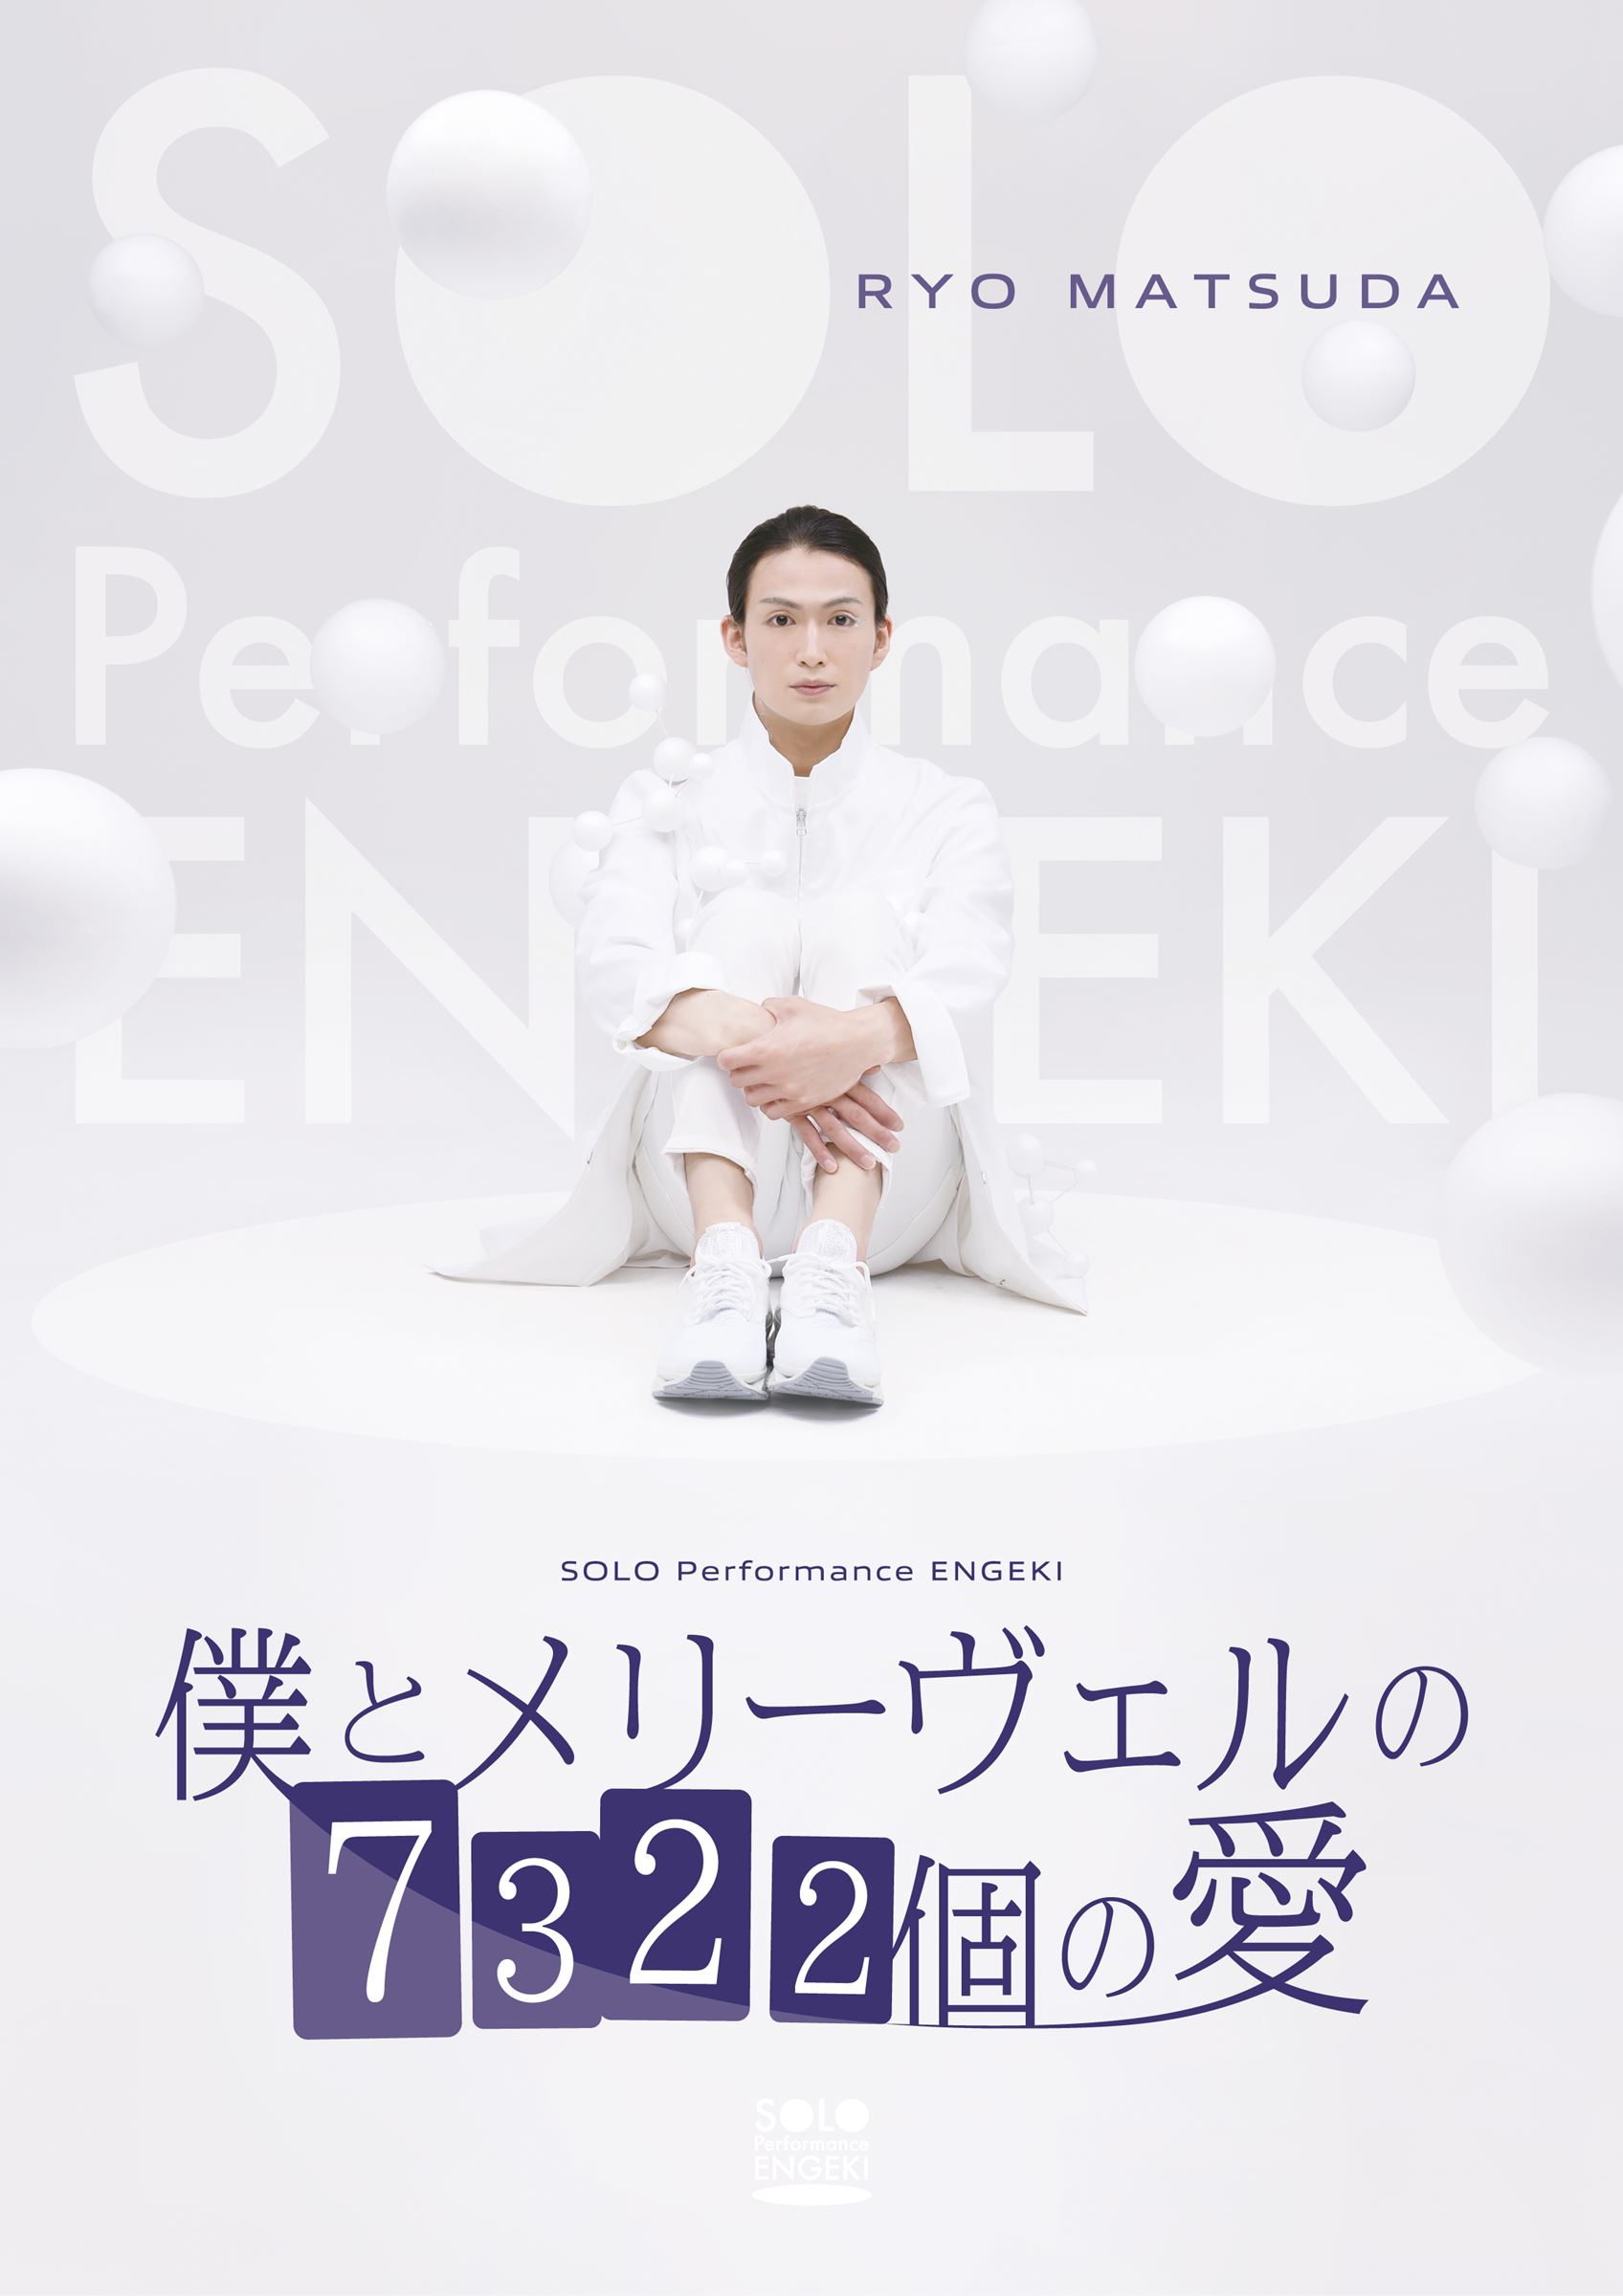 SOLO Performance ENGEKI「僕とメリーヴェルの7322個の愛」キービジュアル